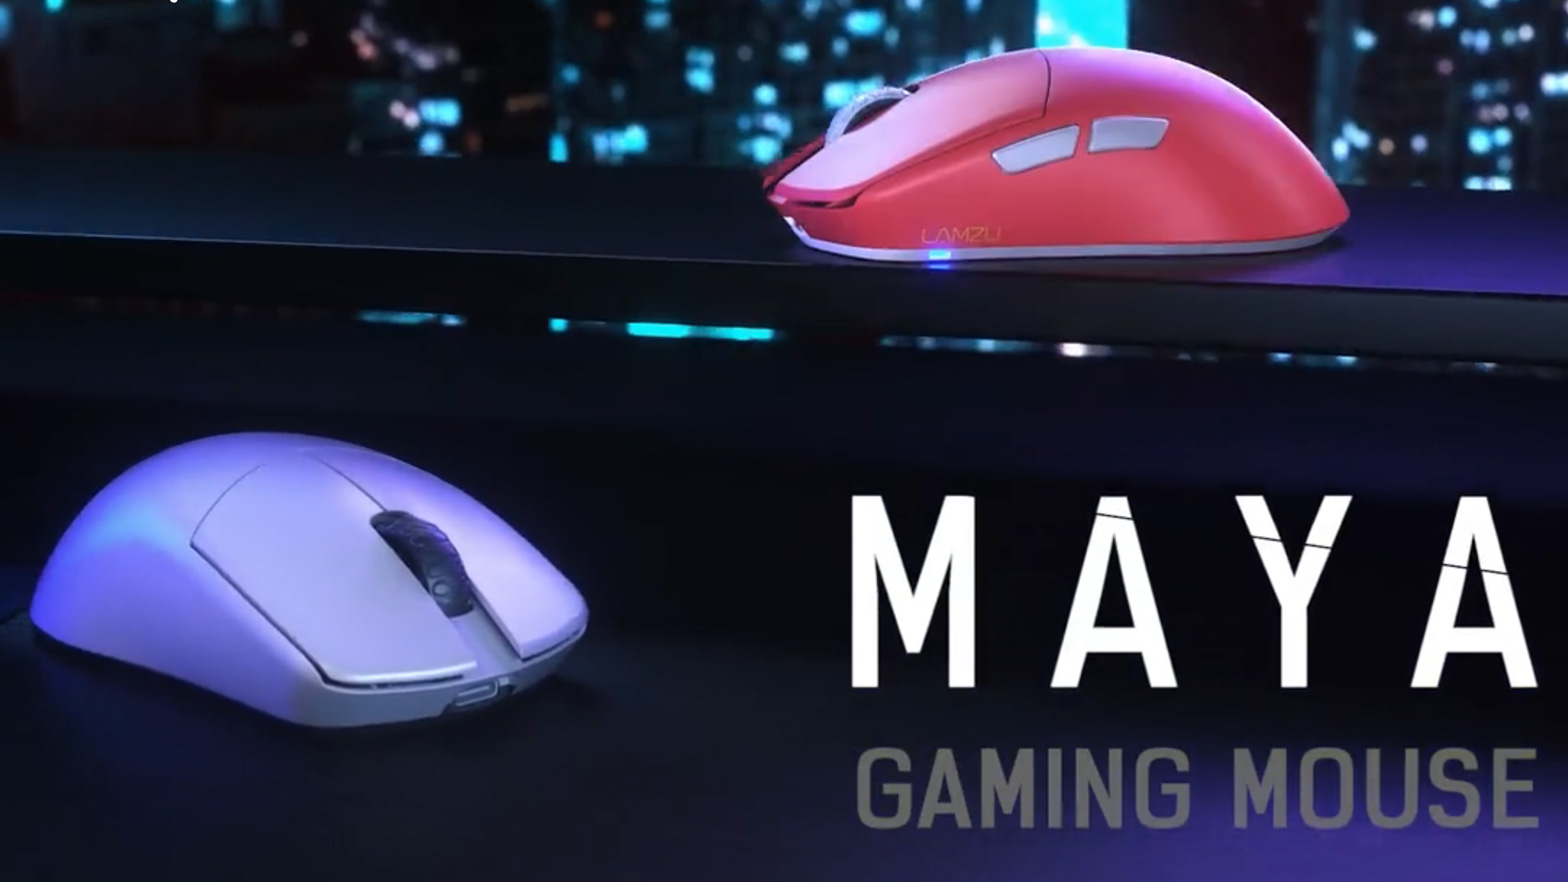 The Lamzu MAYA, a 43g mouse, has been announced